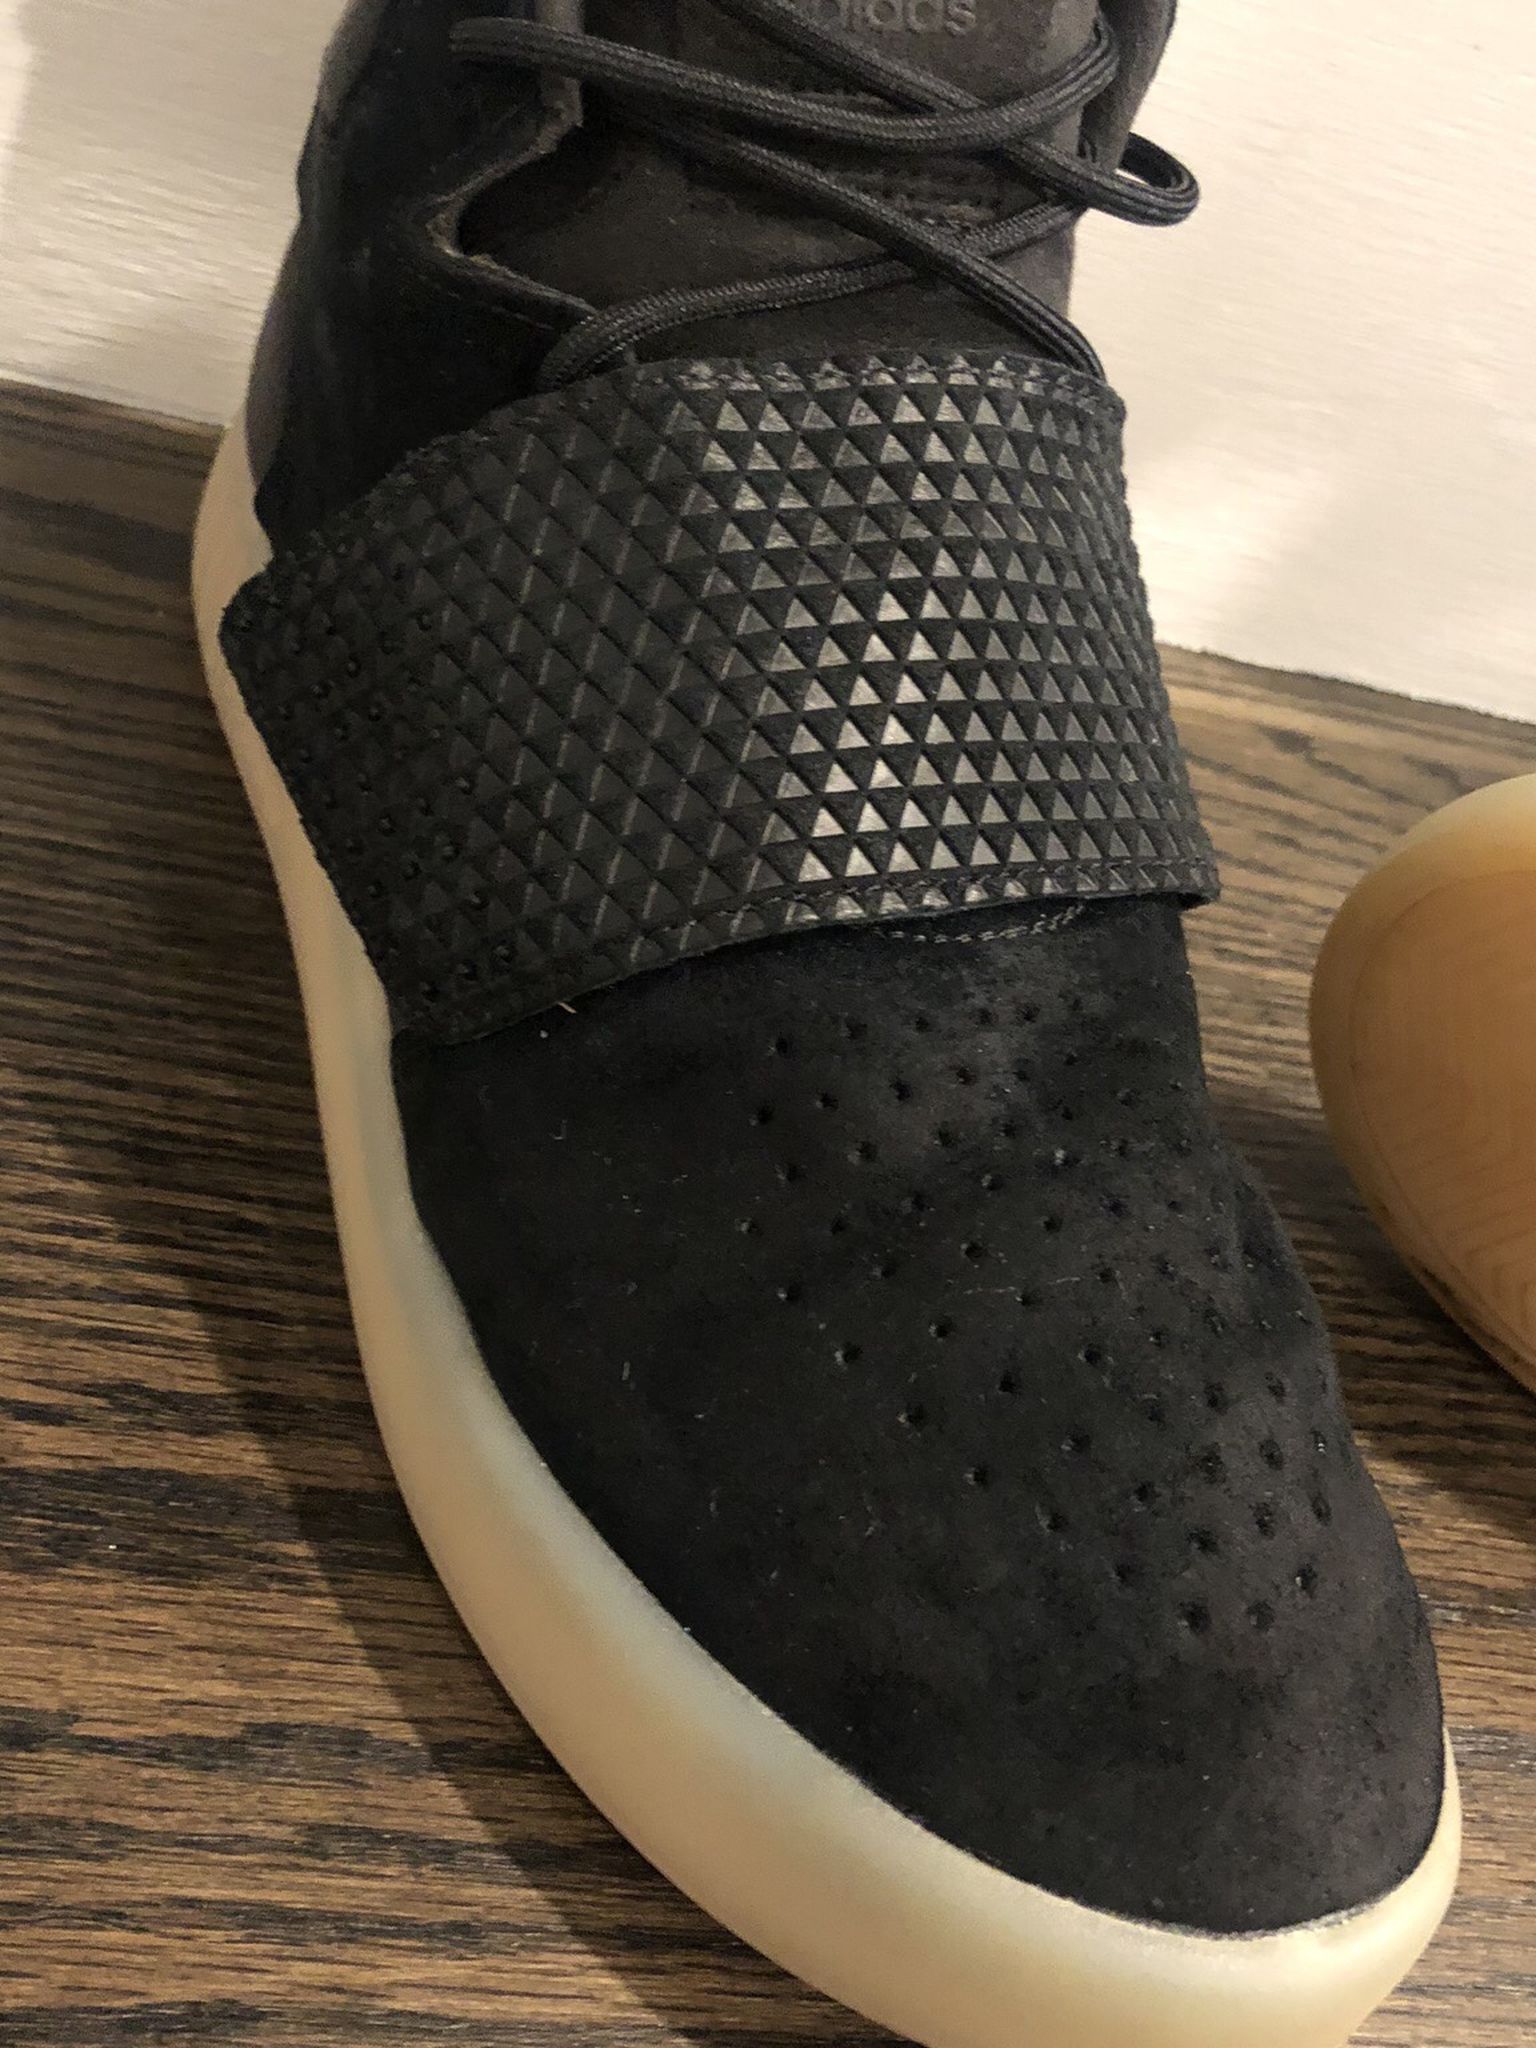 Adidas $40 Size 6